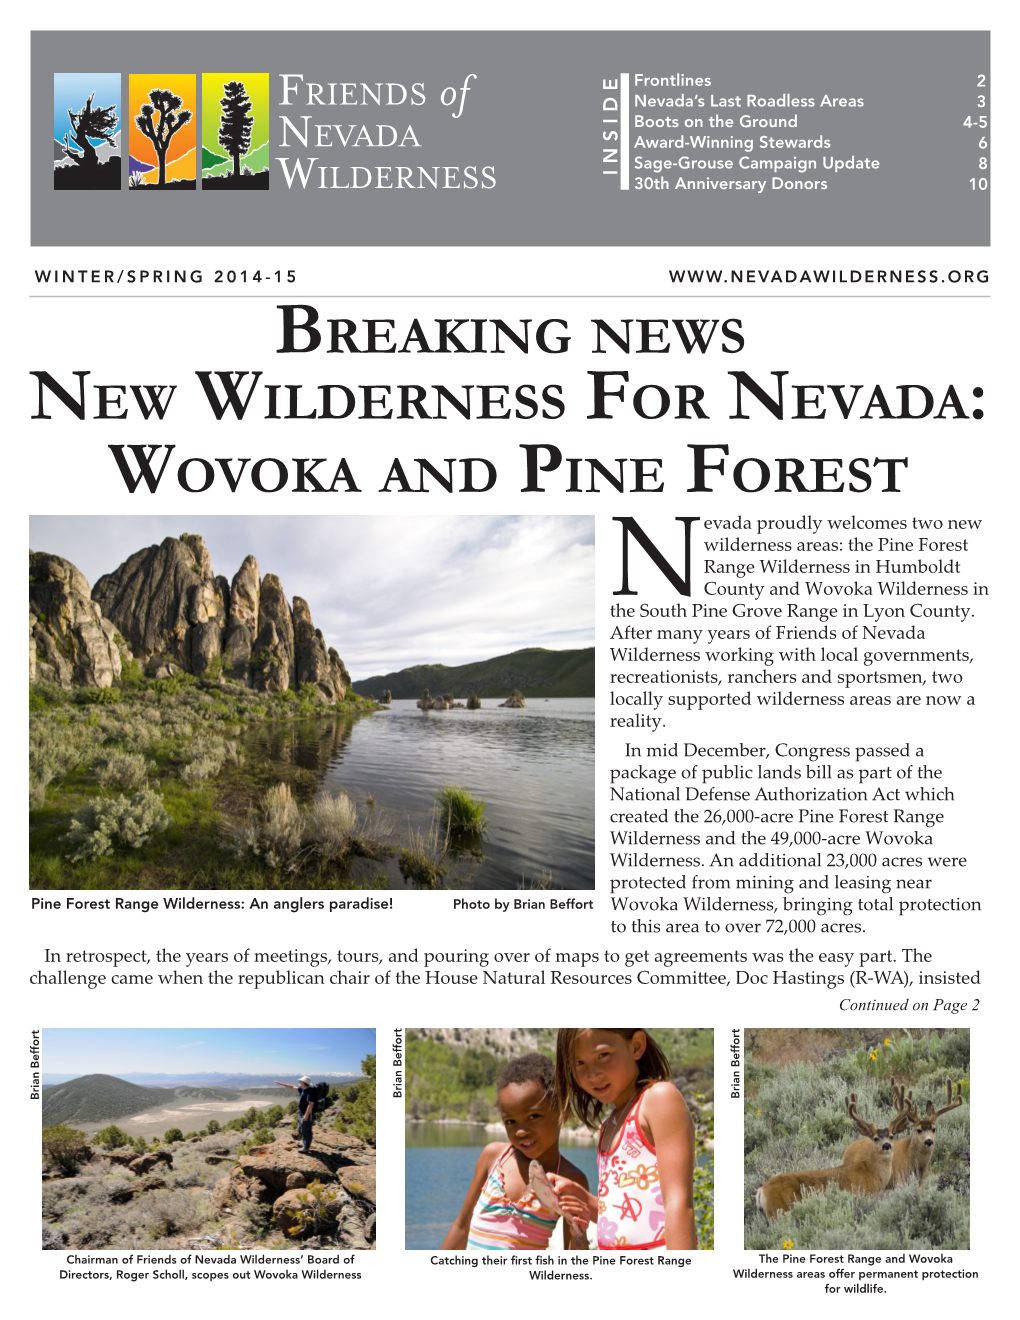 Breaking News New Wilderness for Nevada